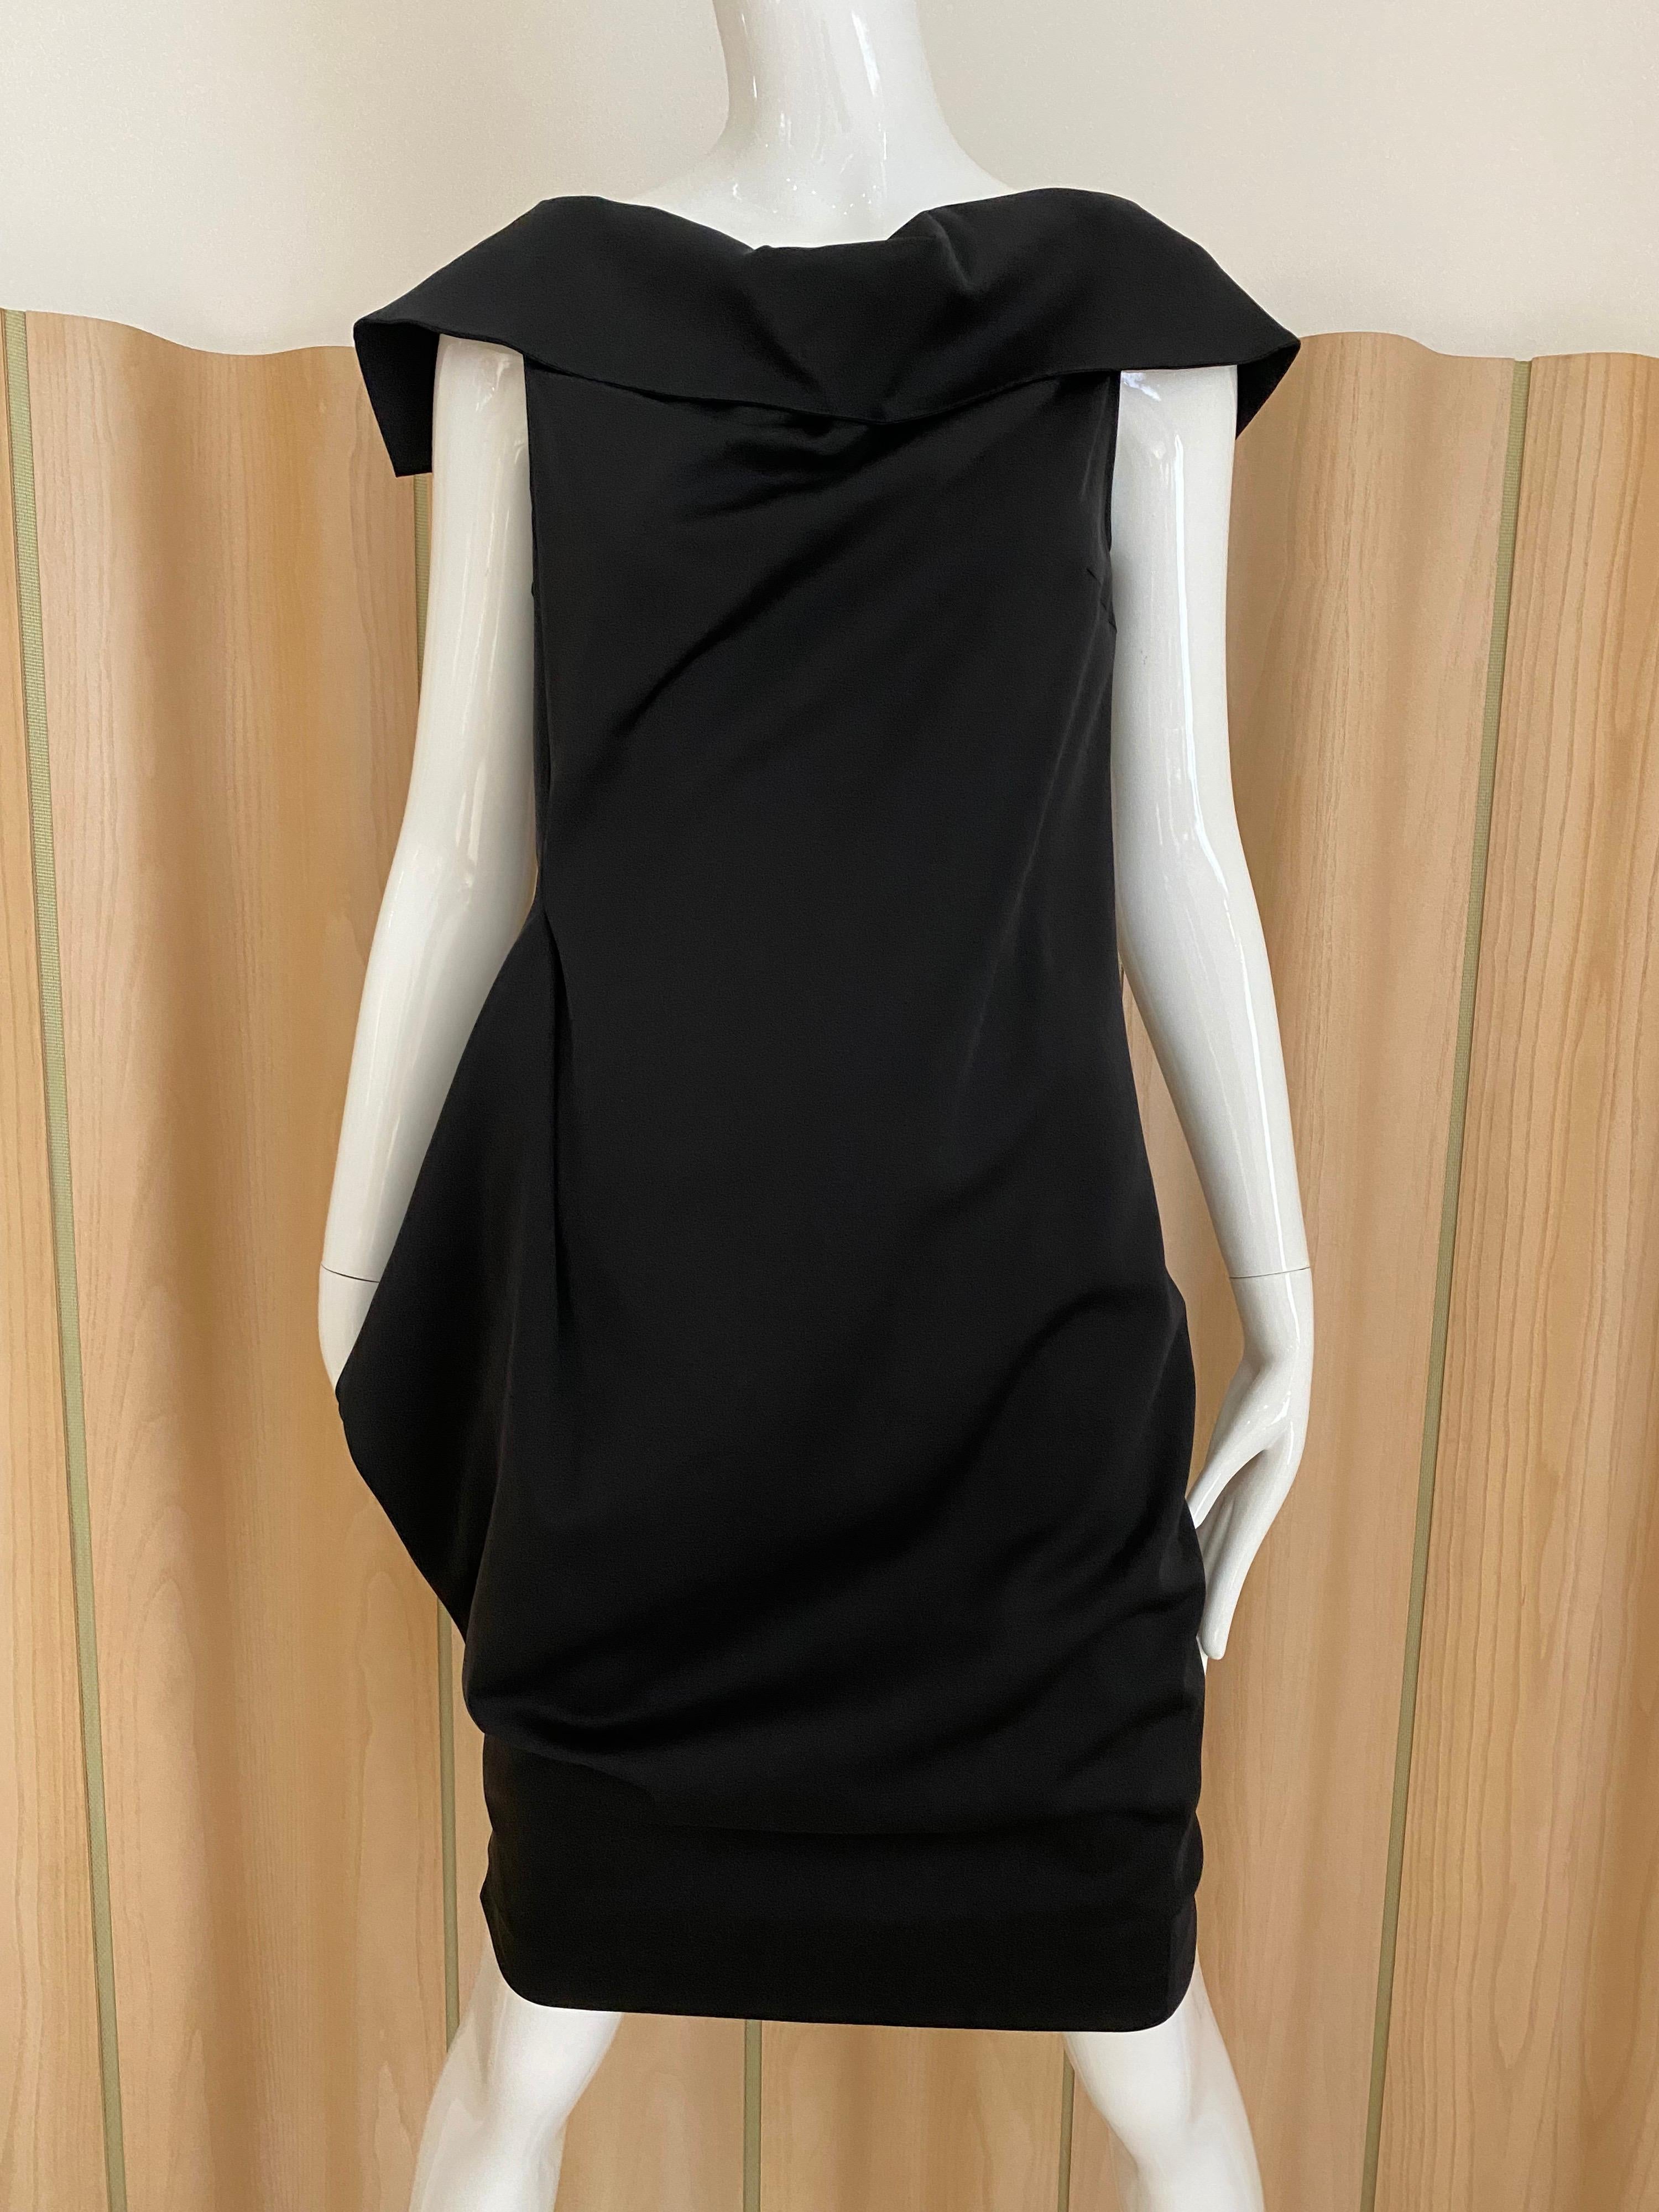 2000s Jil Sander by raf simons black cocktail dress.
Marked size 38
small- medium